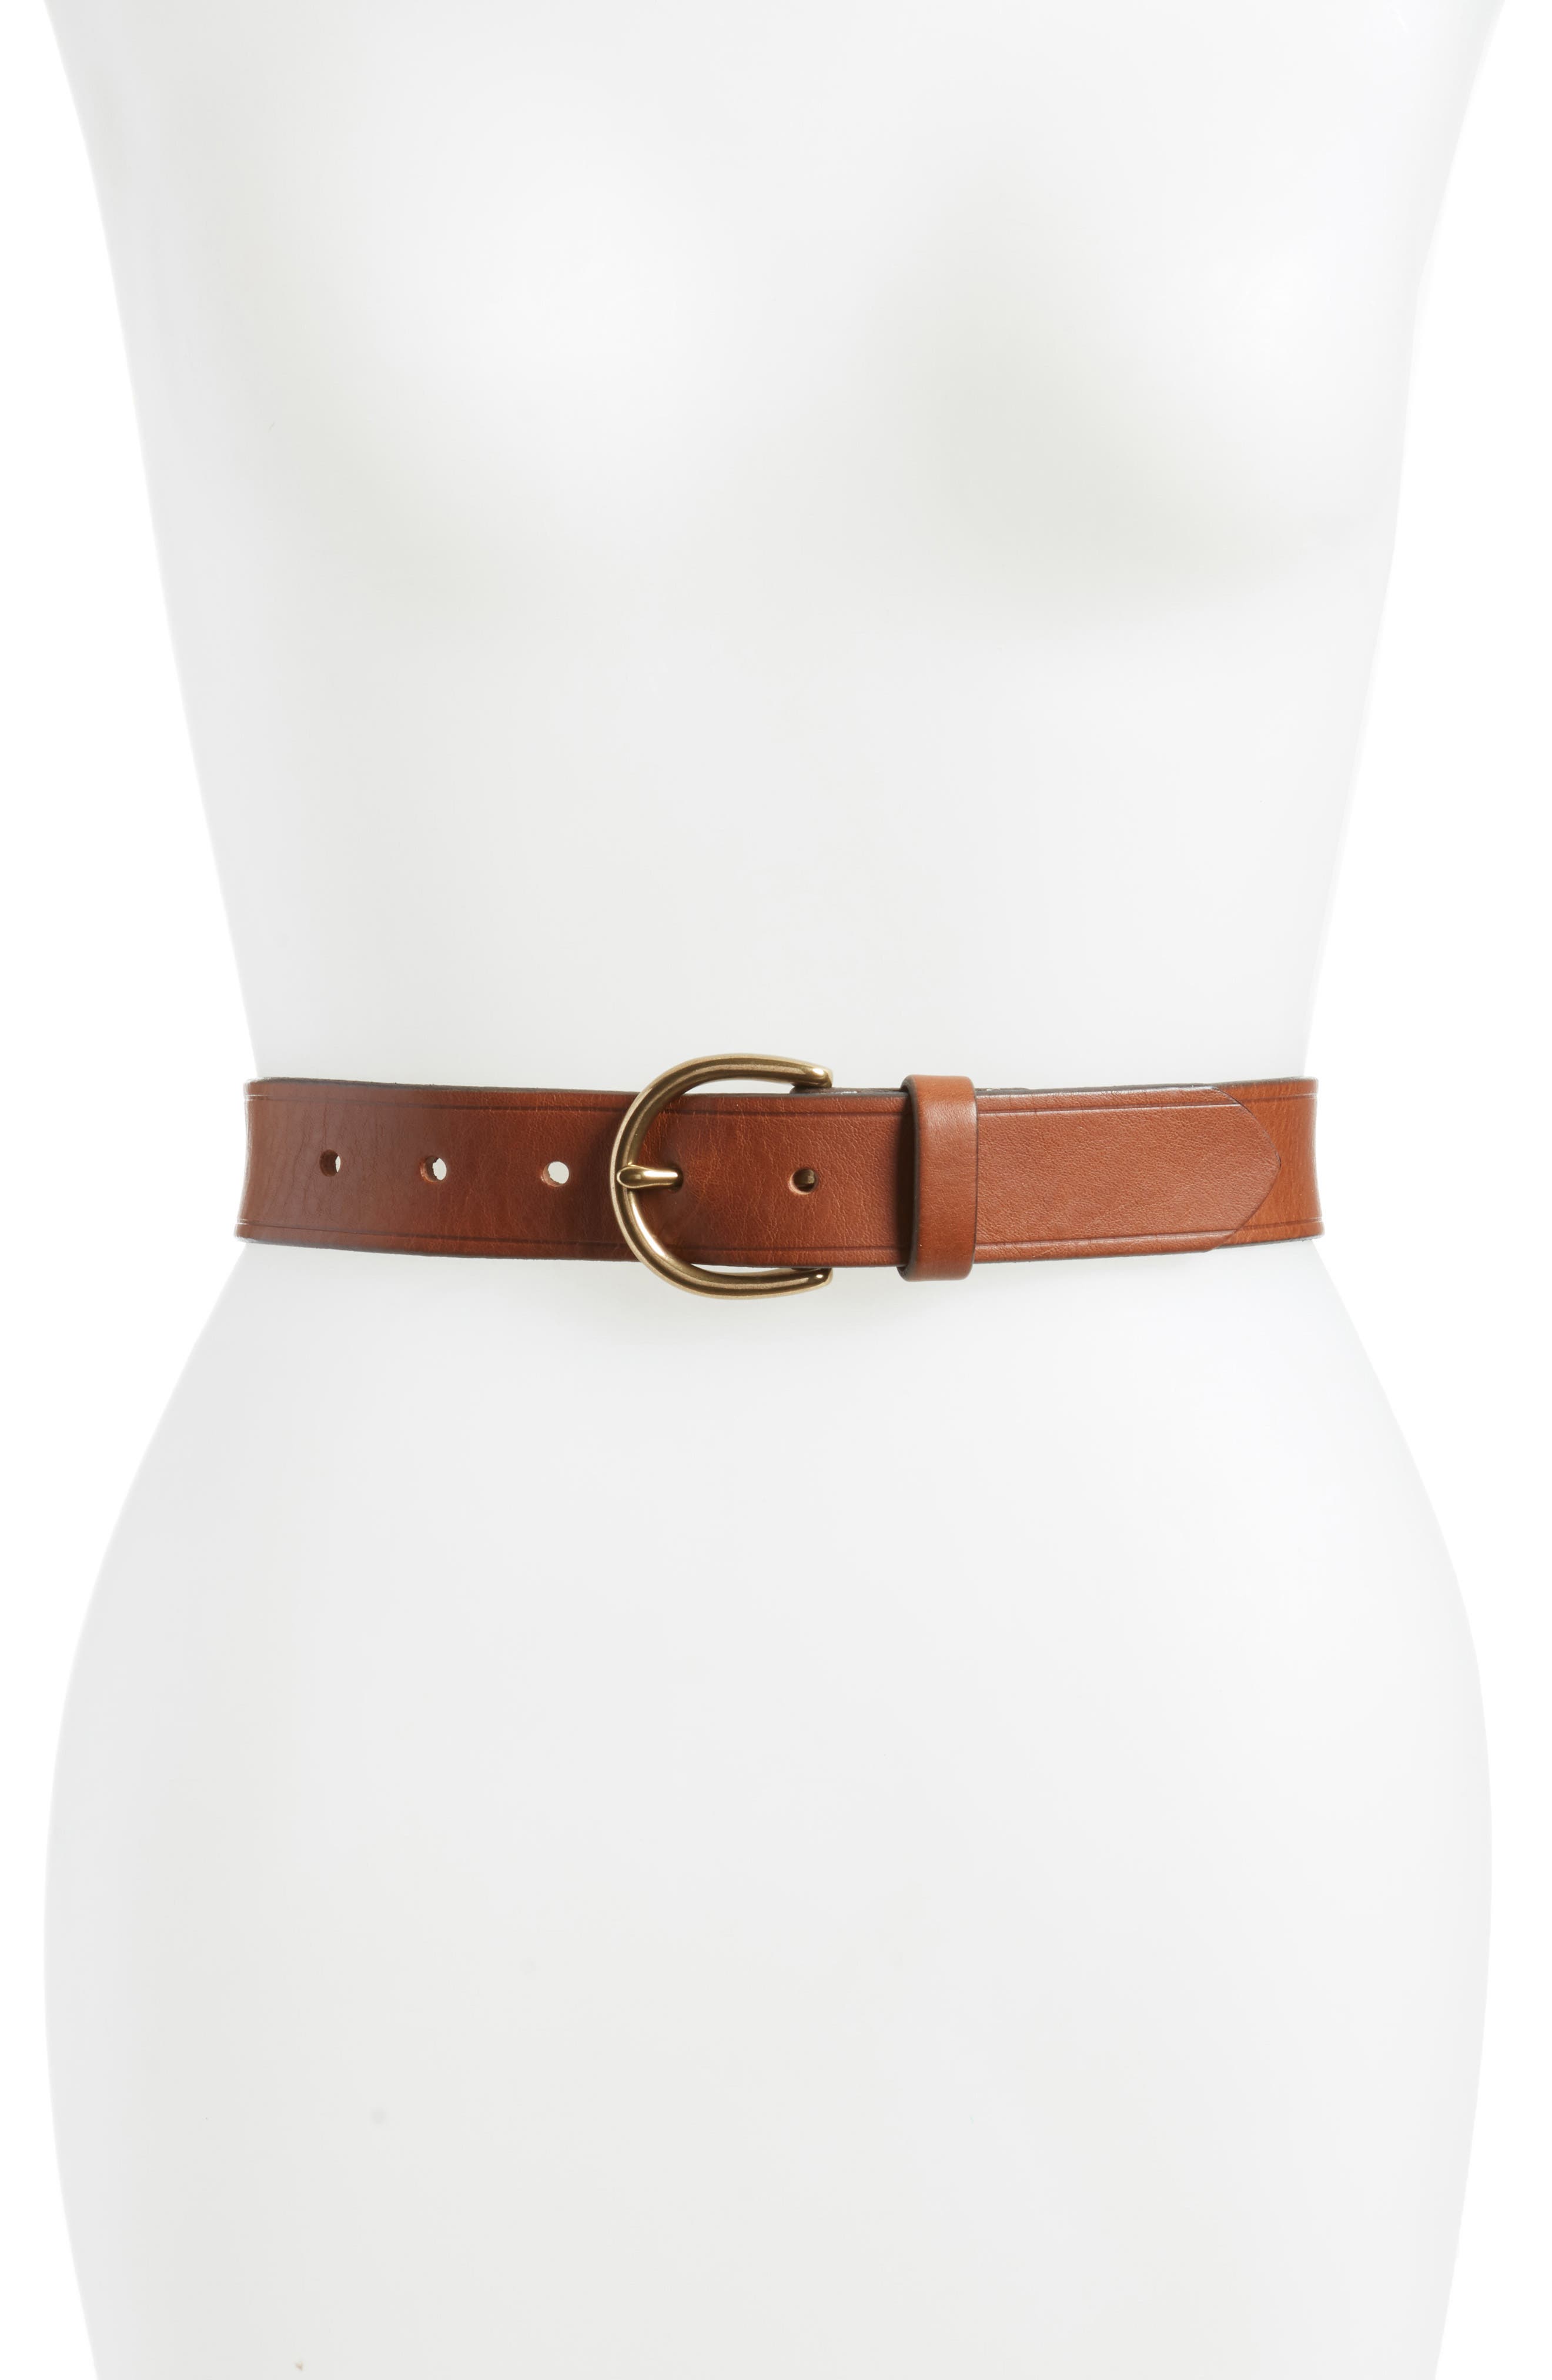 Stylish Designs Women's Belt Genuine Leather Made Female Dress Straps Accesories